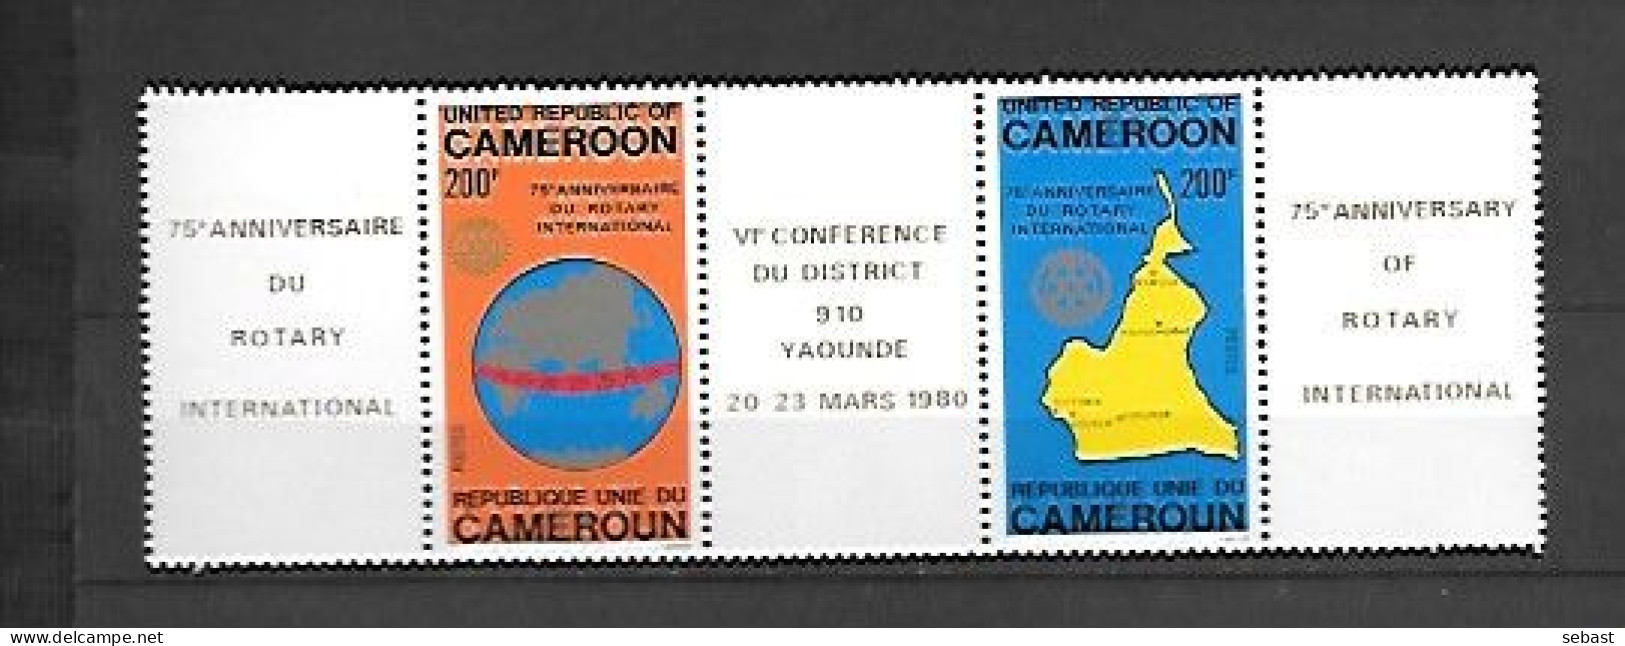 TIMBRE NEUF DU CAMEROUN DE 1980 N° MICHEL 925/26 - Kameroen (1960-...)